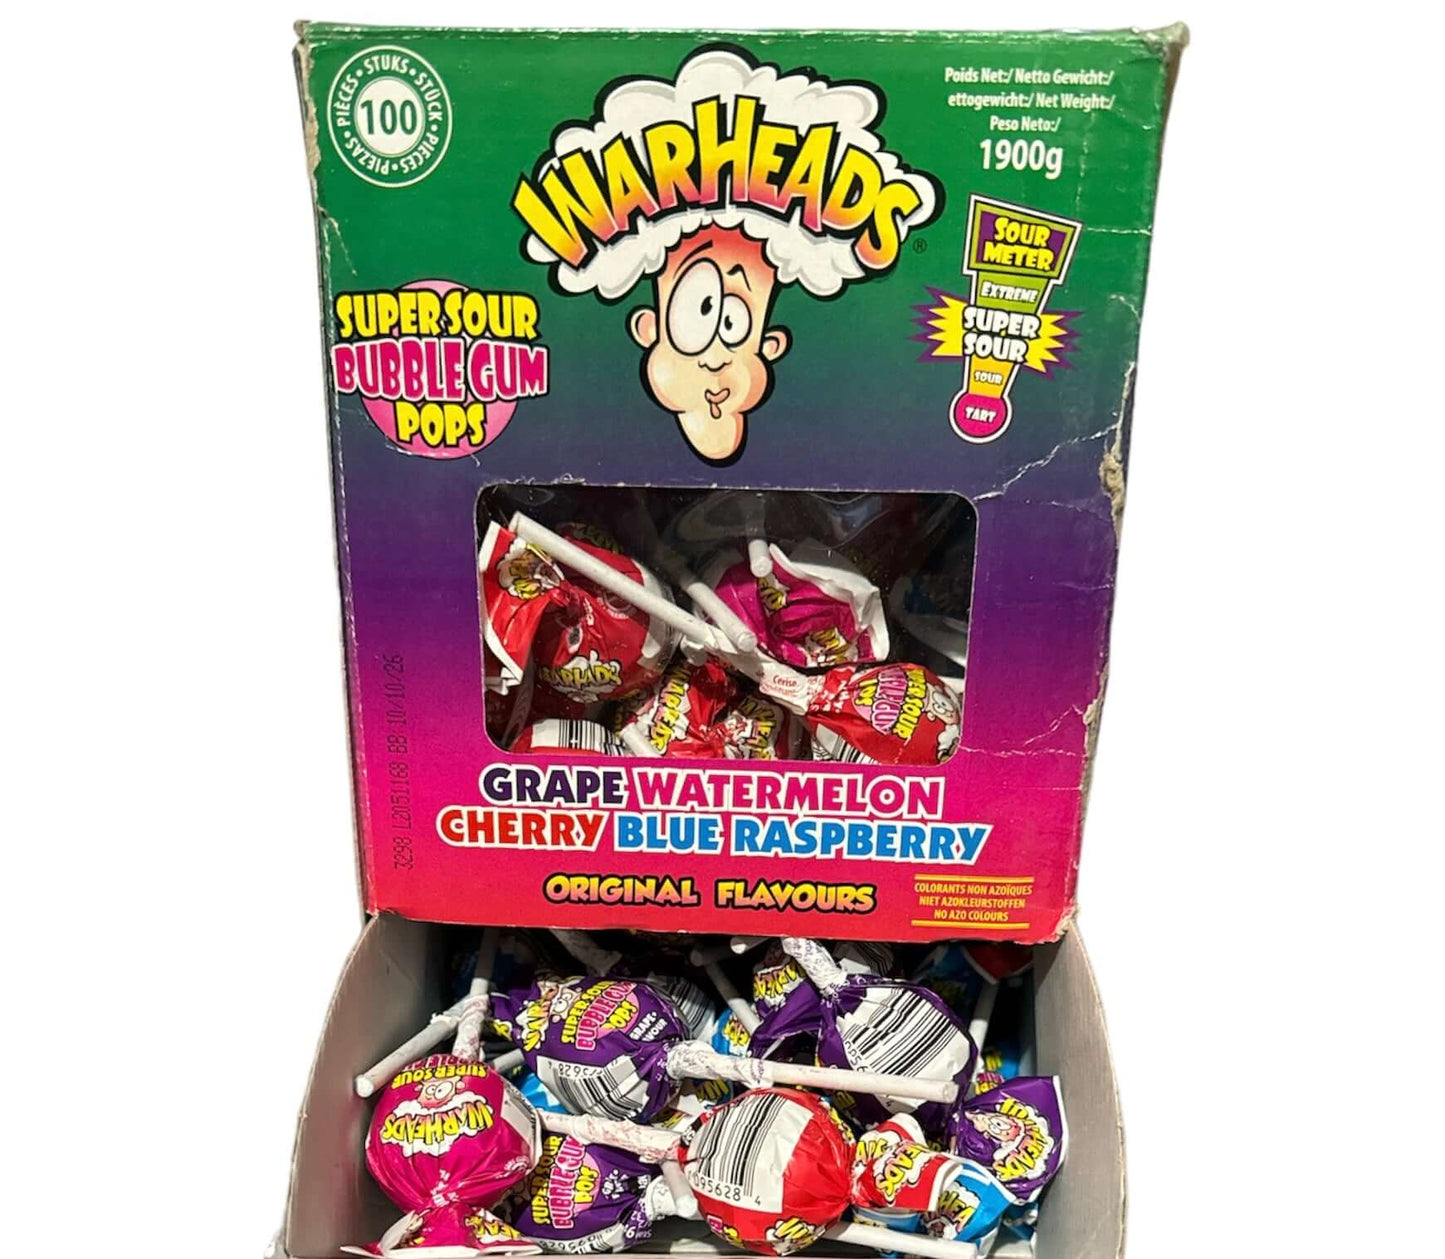 Warhead Super Sour Bubblegum Pops